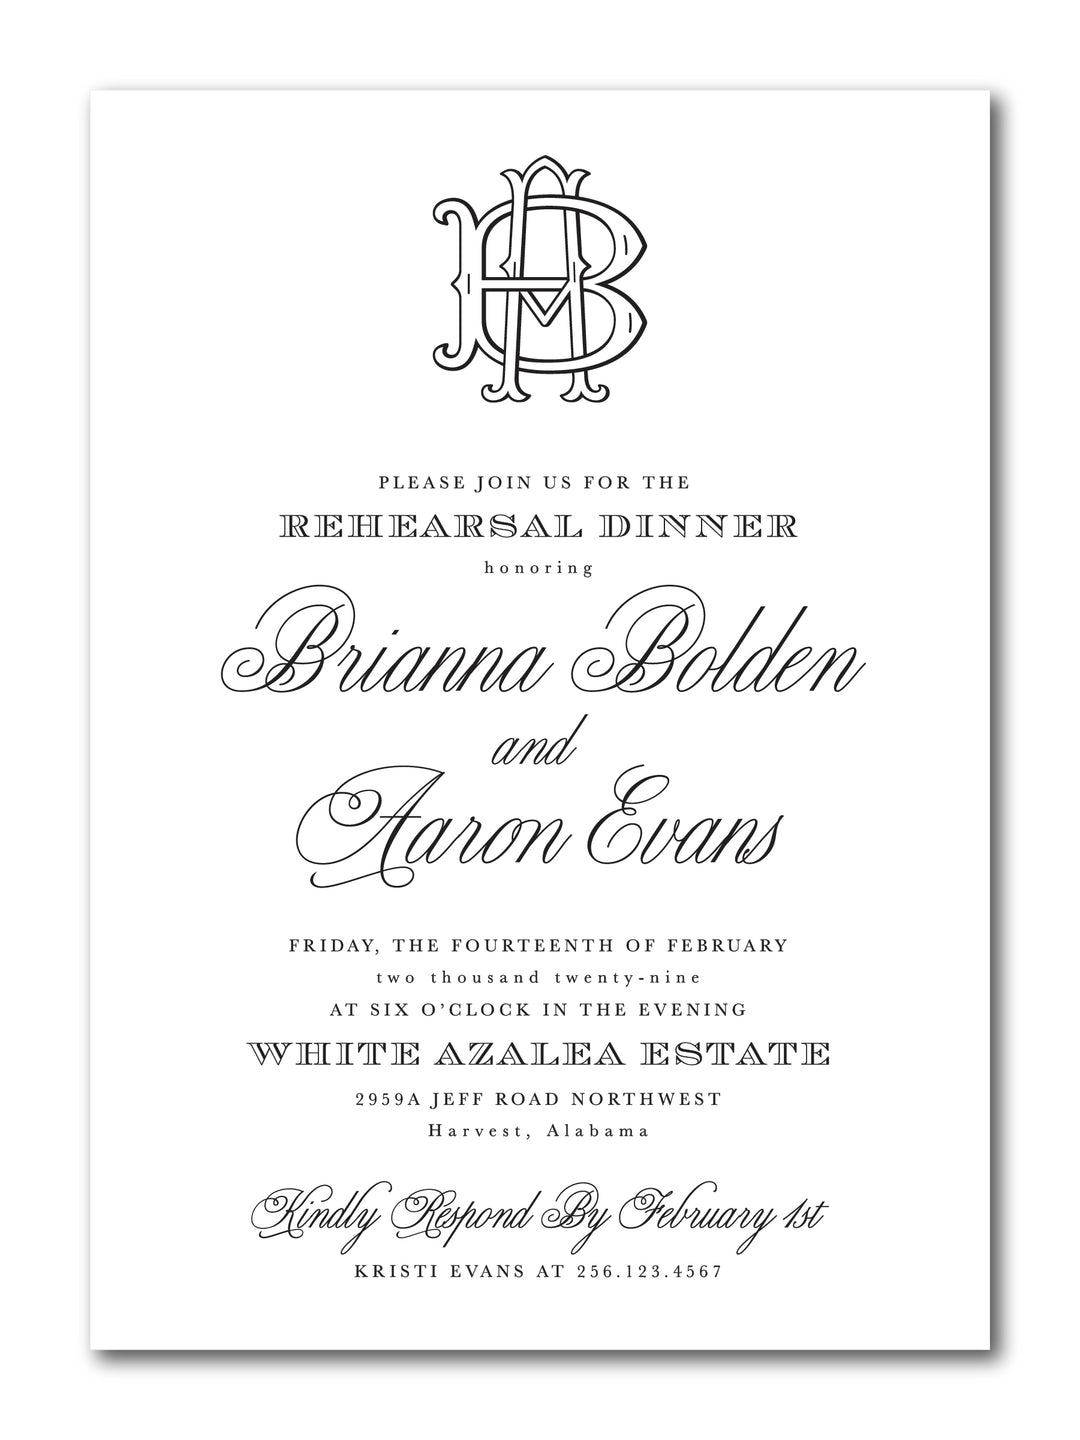 The Brianna Rehearsal Dinner Invitation